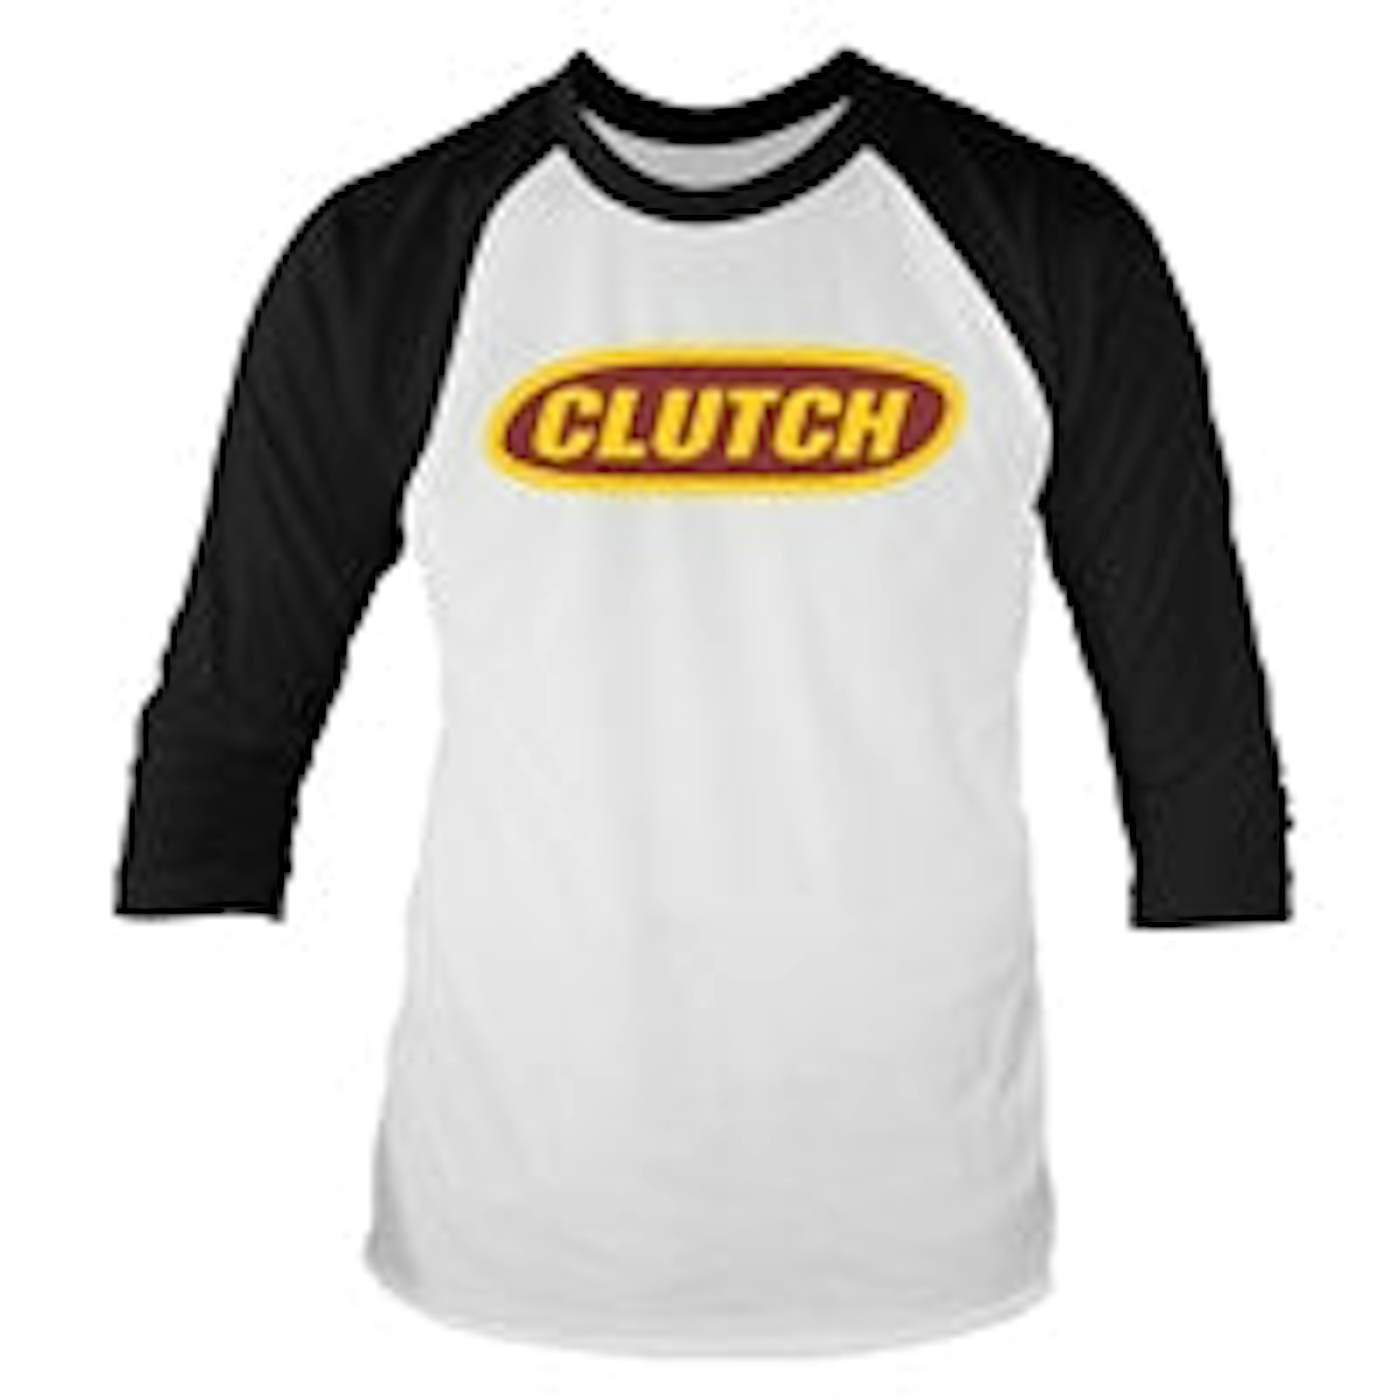 Clutch Long Sleeve T Shirt - Classic Logo (Whte/Black)